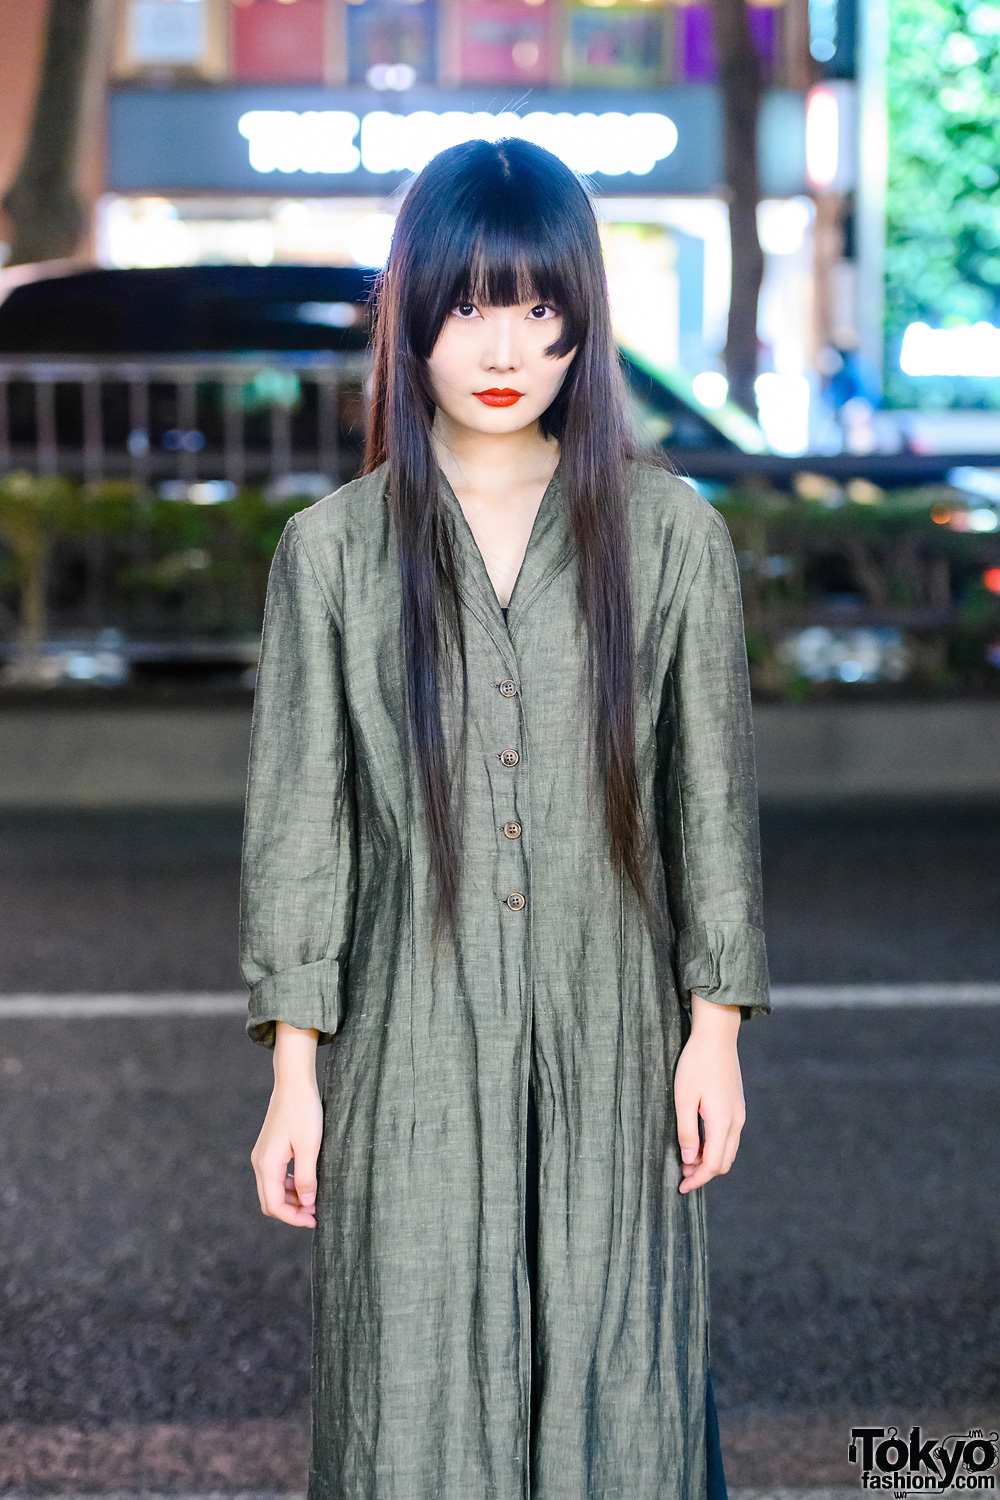 Minimalist Japanese Street Fashion w/ Long Black Hair Style, Vintage ...